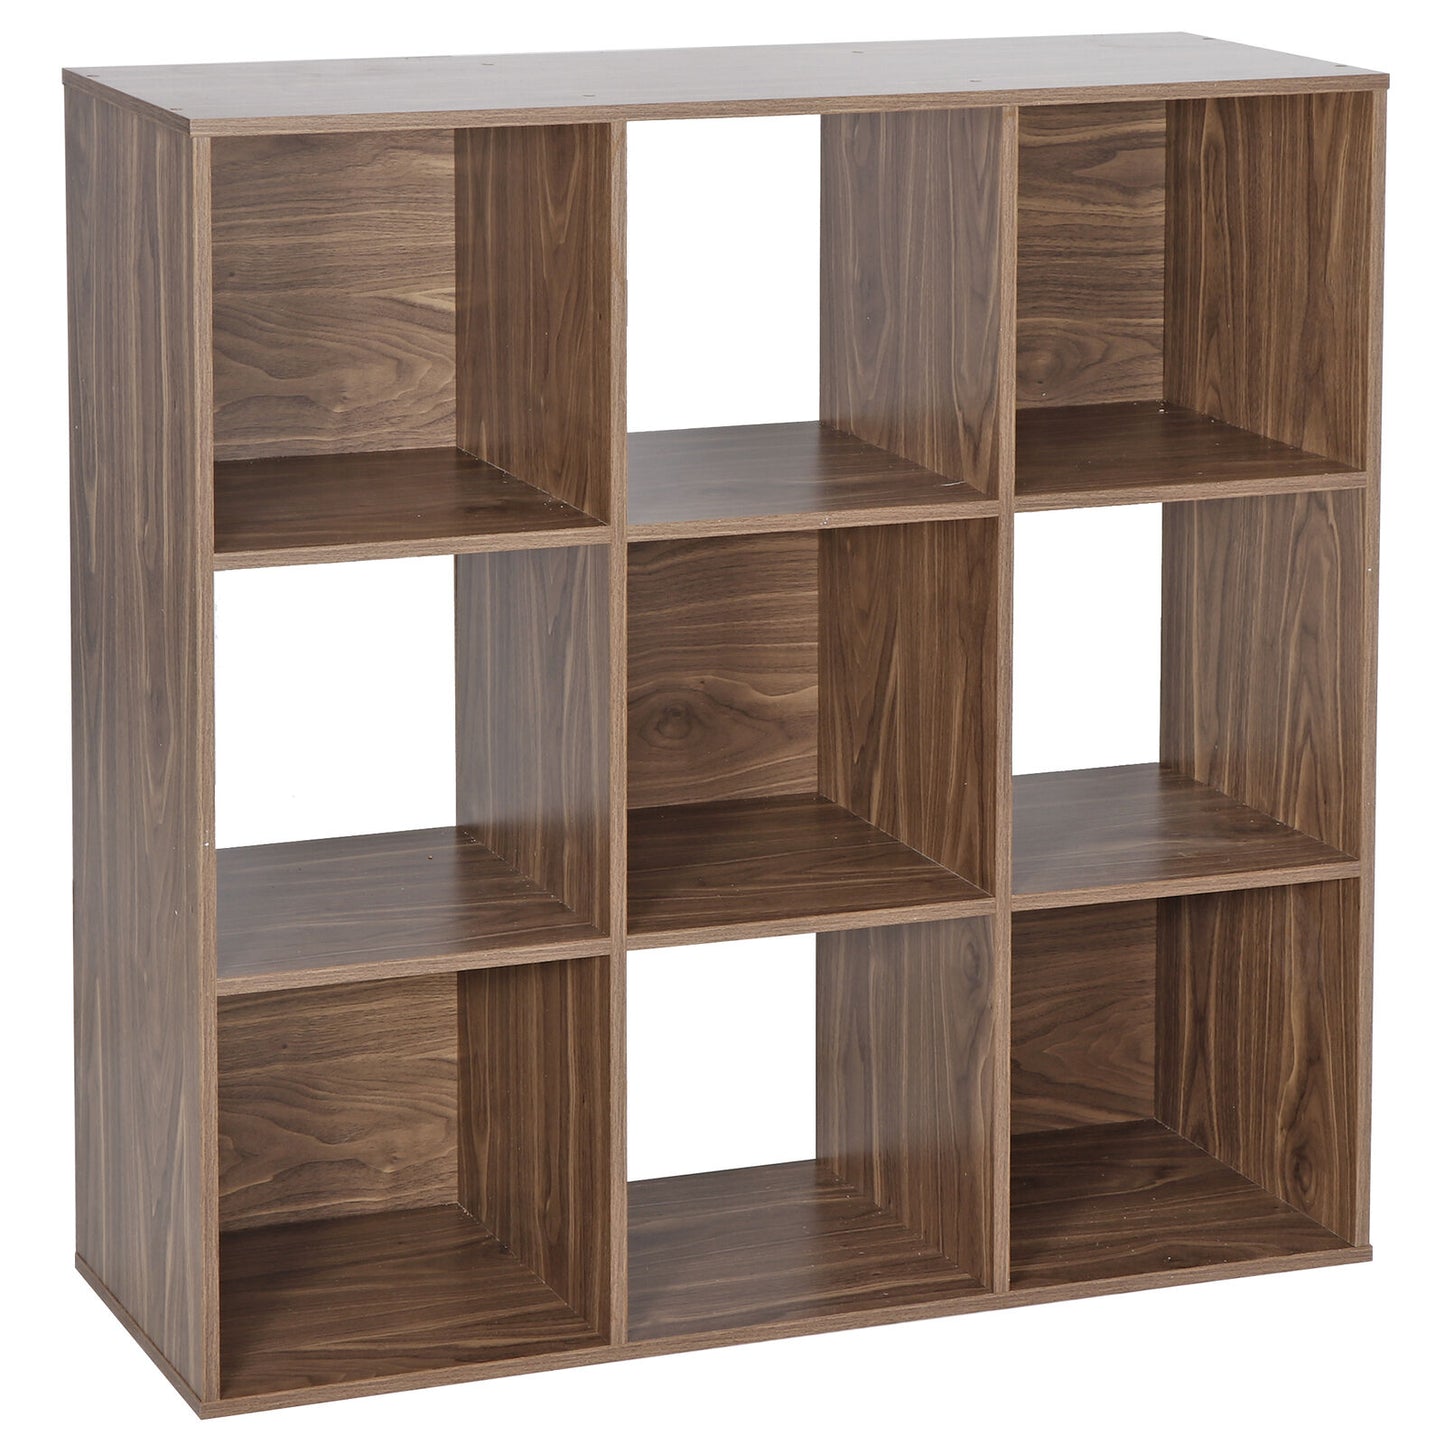 9-Cube Closet Organizer Storage Shelves Save Space Indoor Study Bookshelves